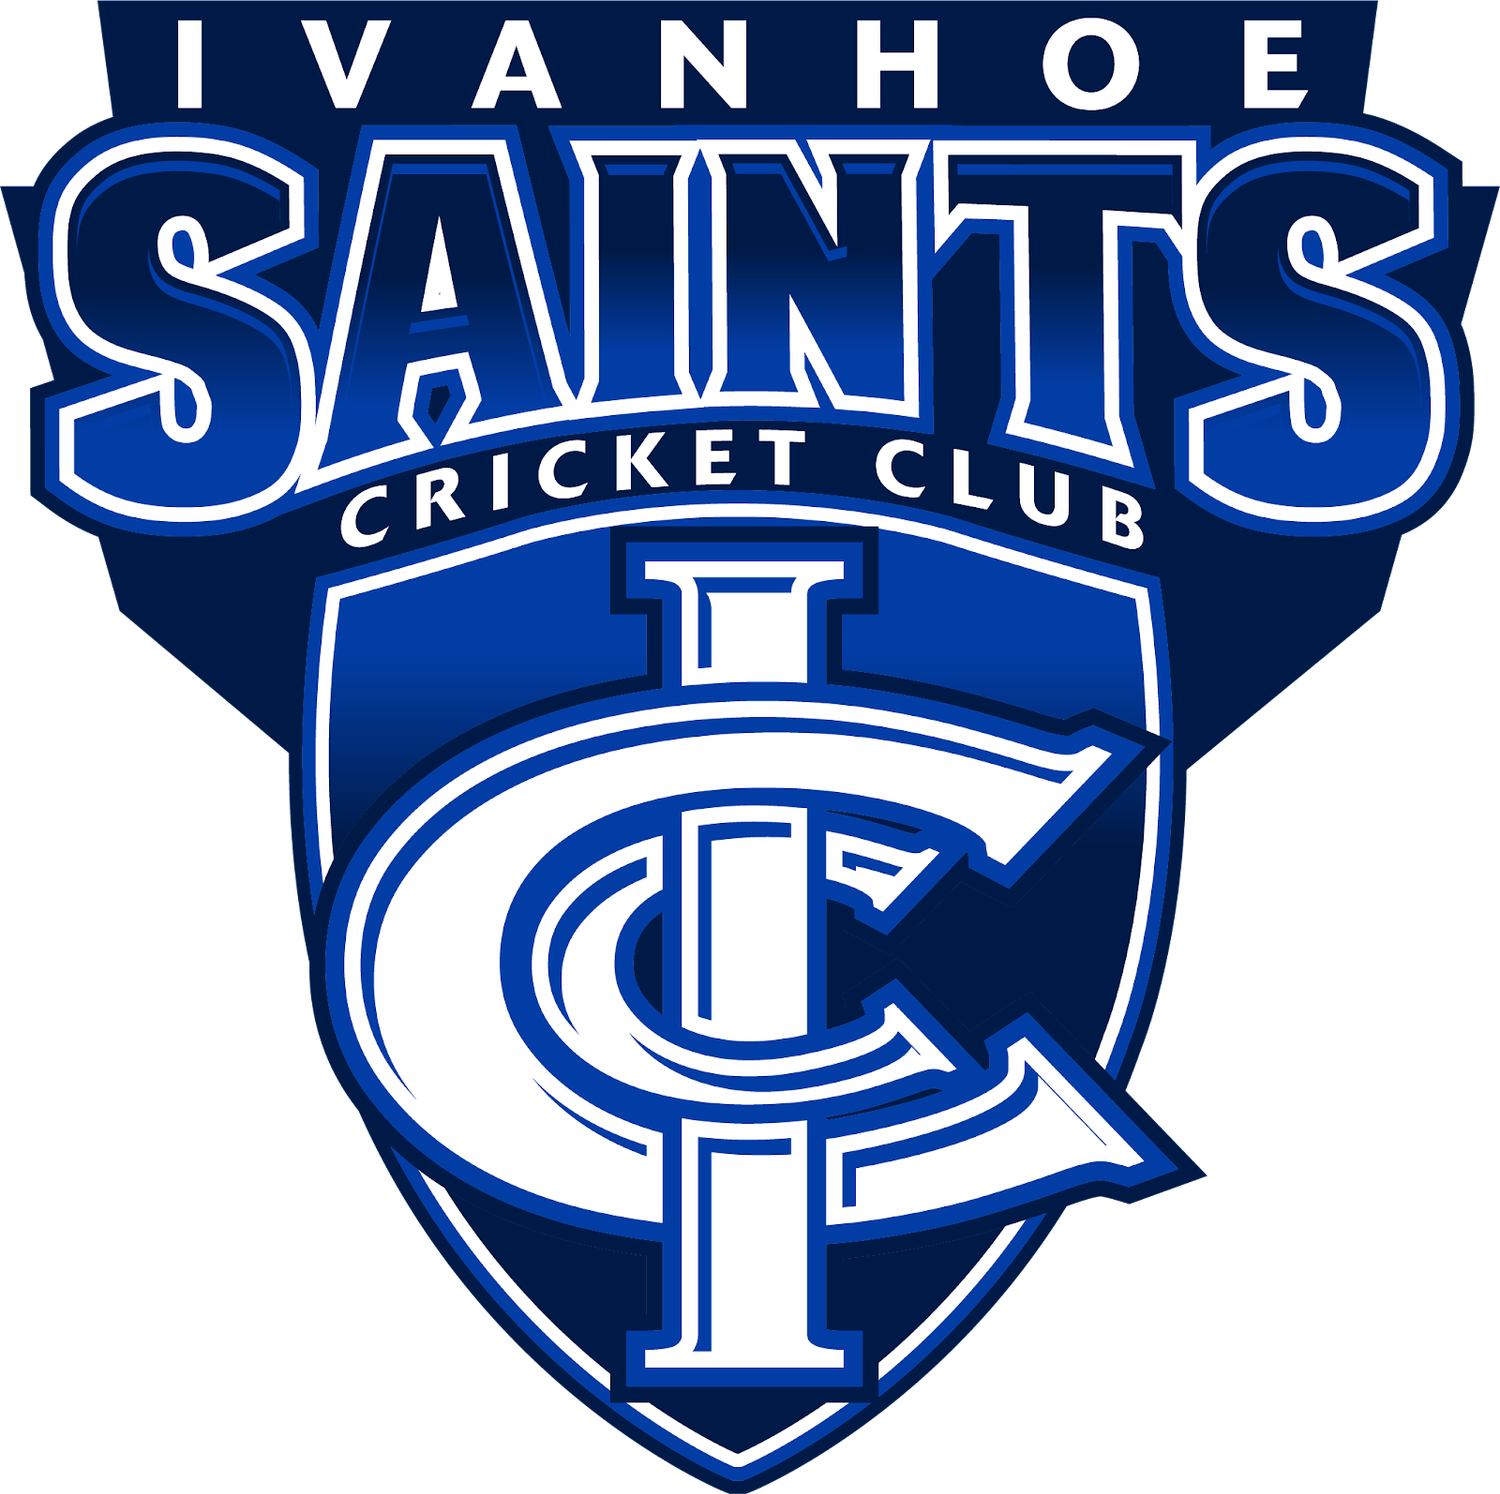 Ivanhoe Saints Cricket Club